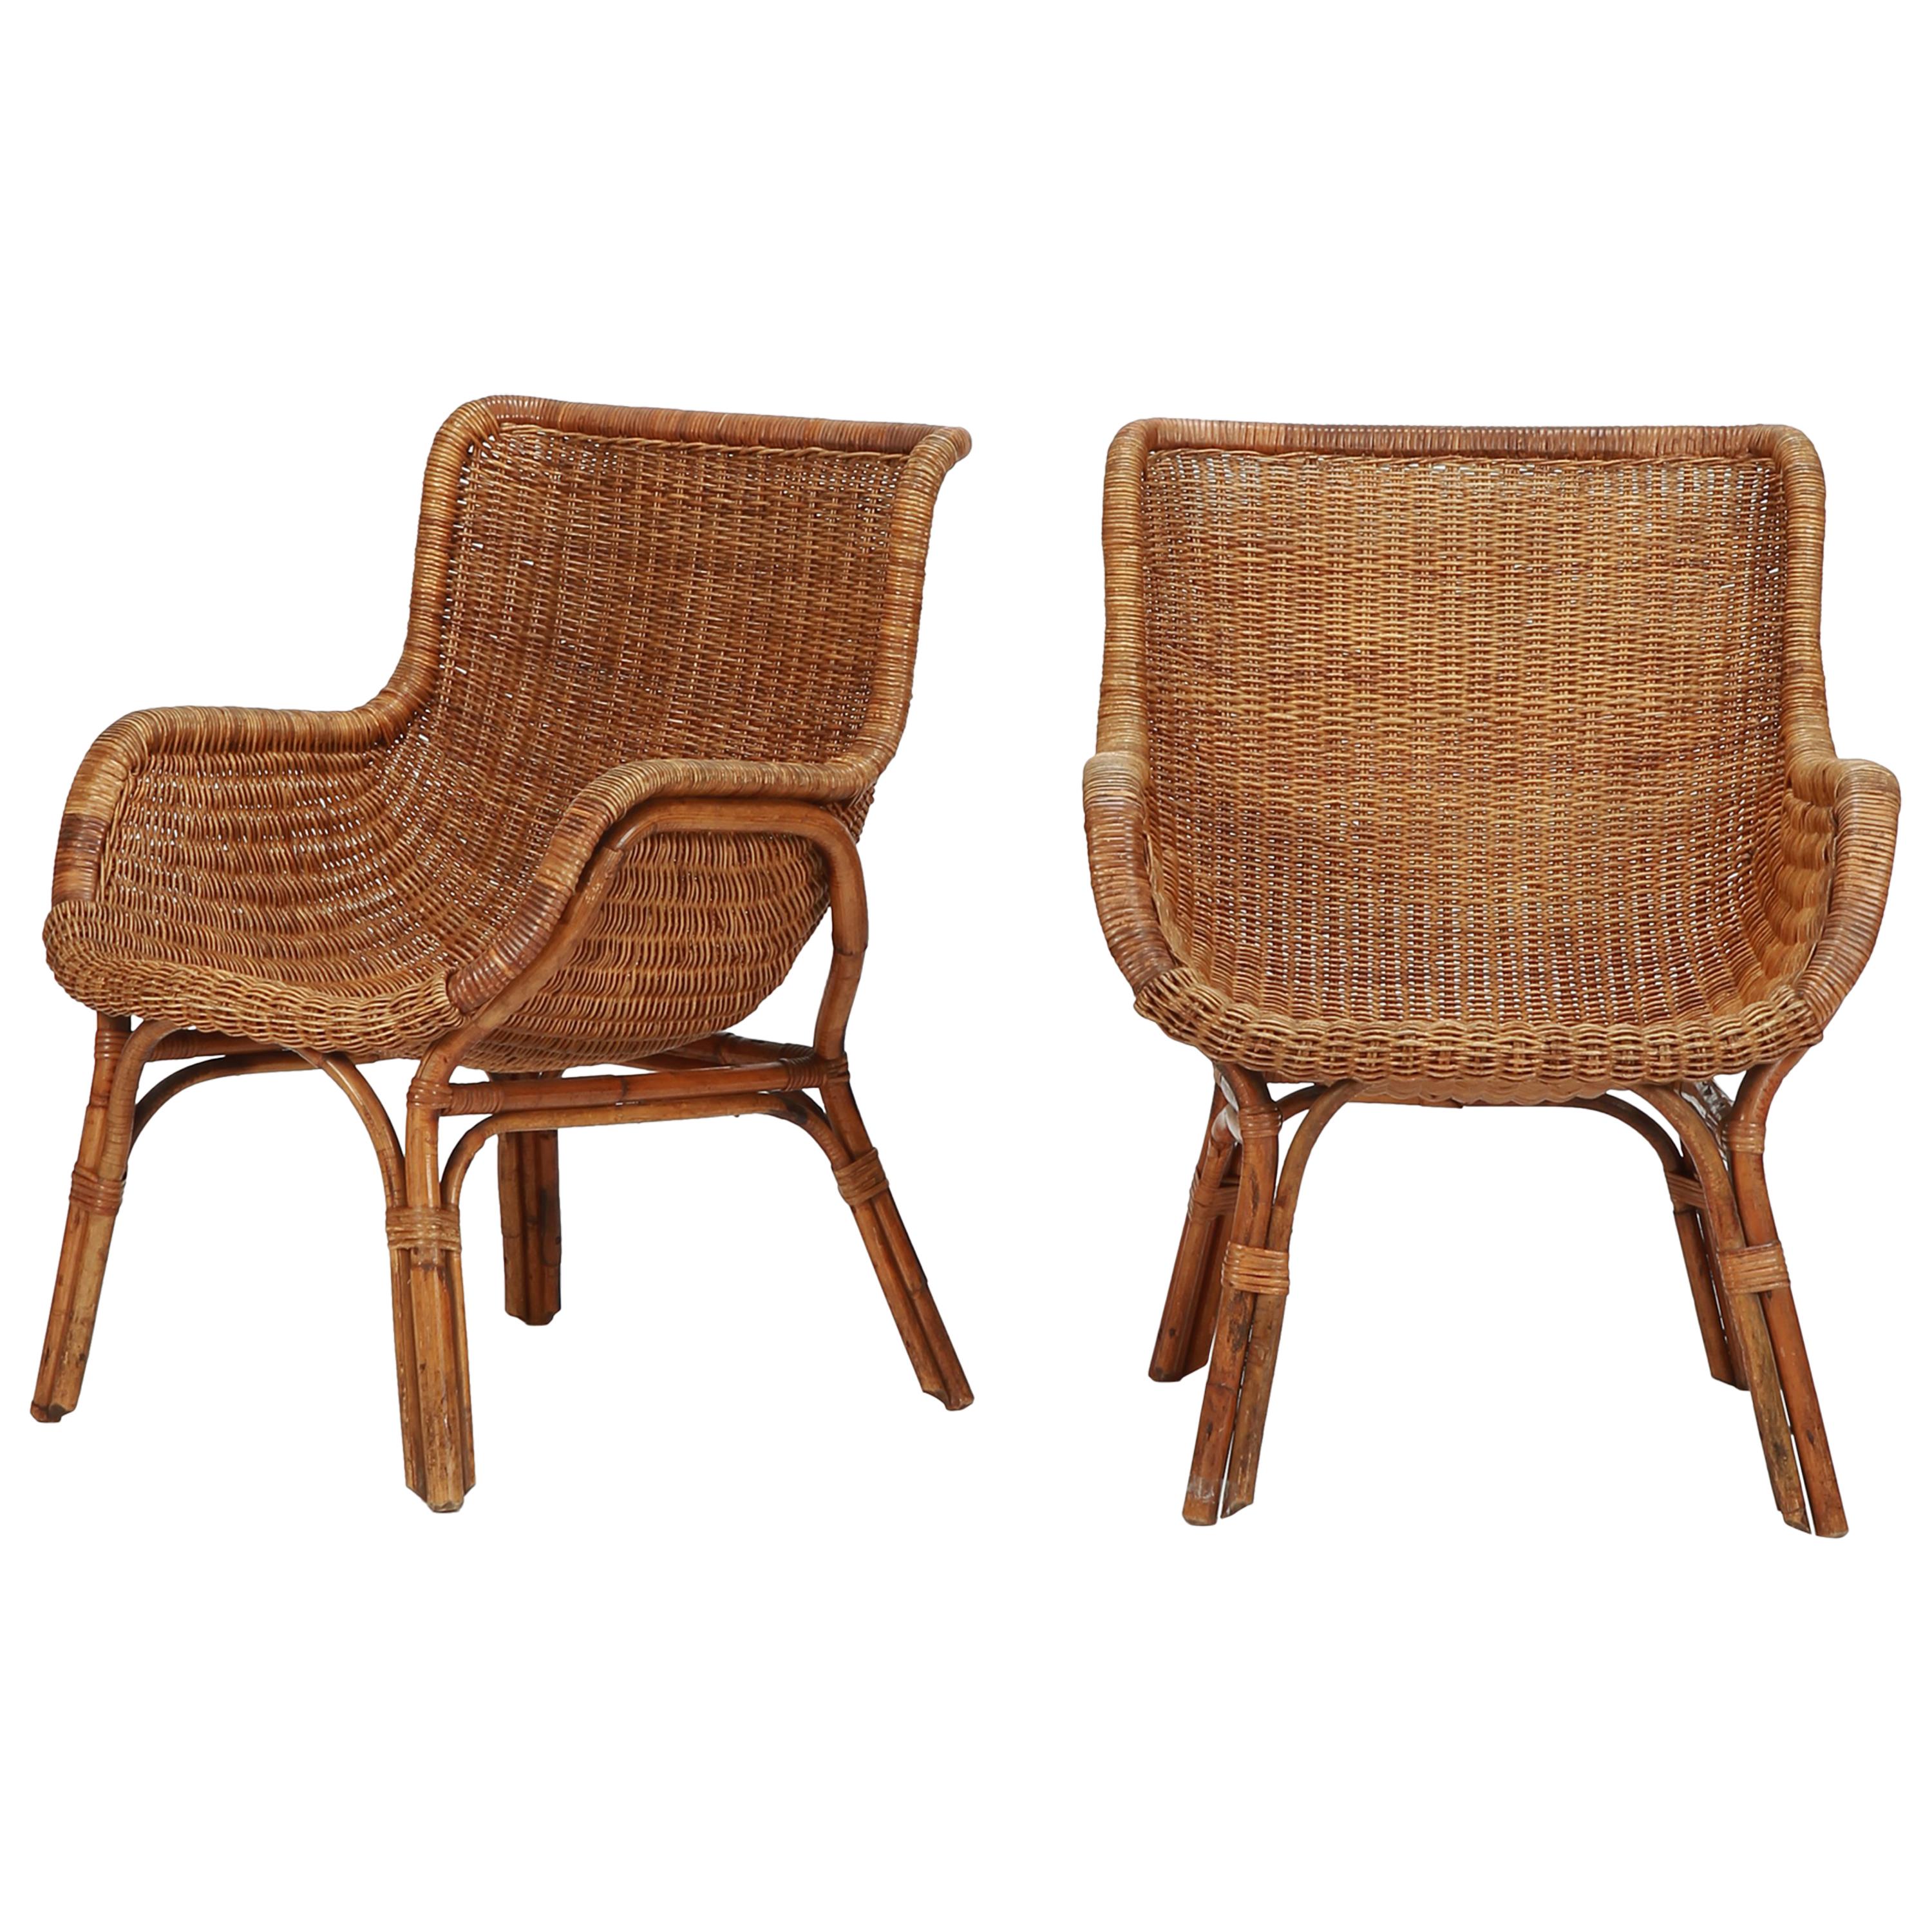 Two Bonacina Bamboo Chairs Italy, 1950s